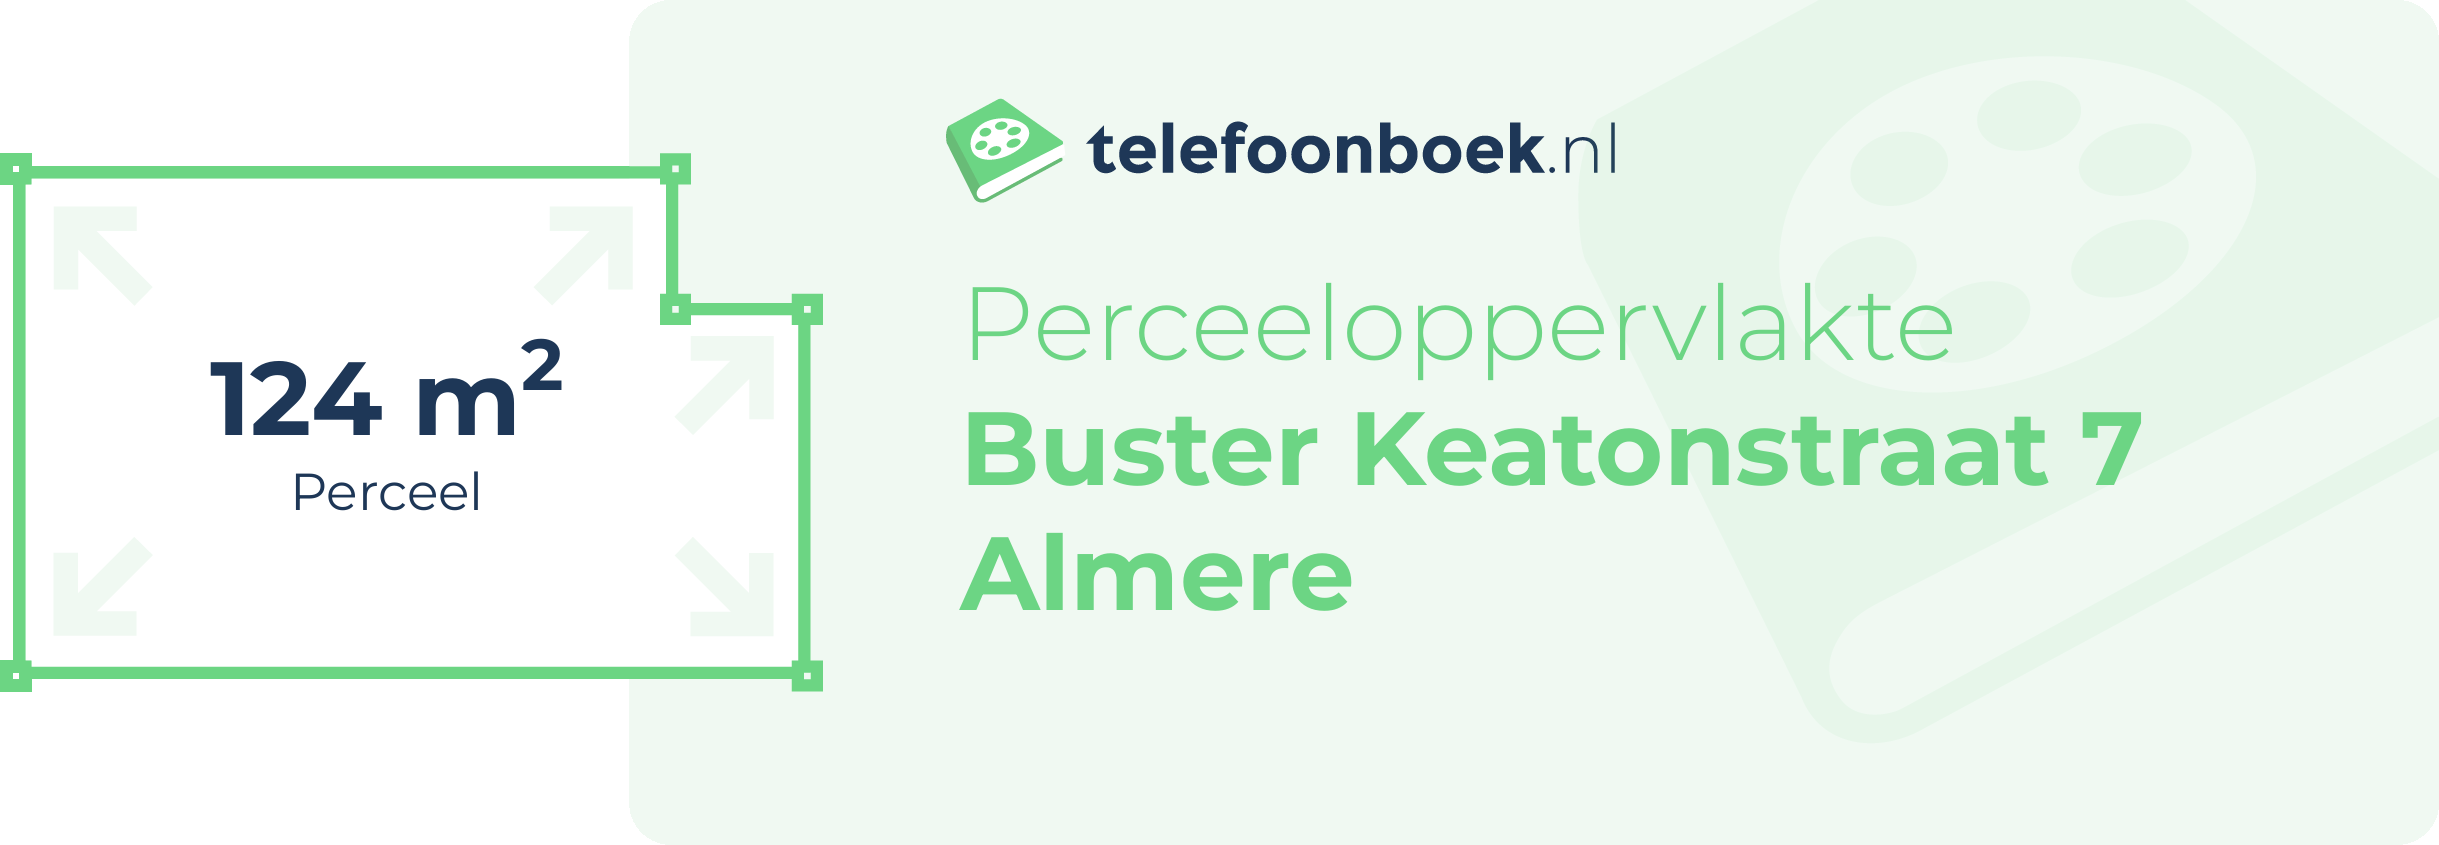 Perceeloppervlakte Buster Keatonstraat 7 Almere